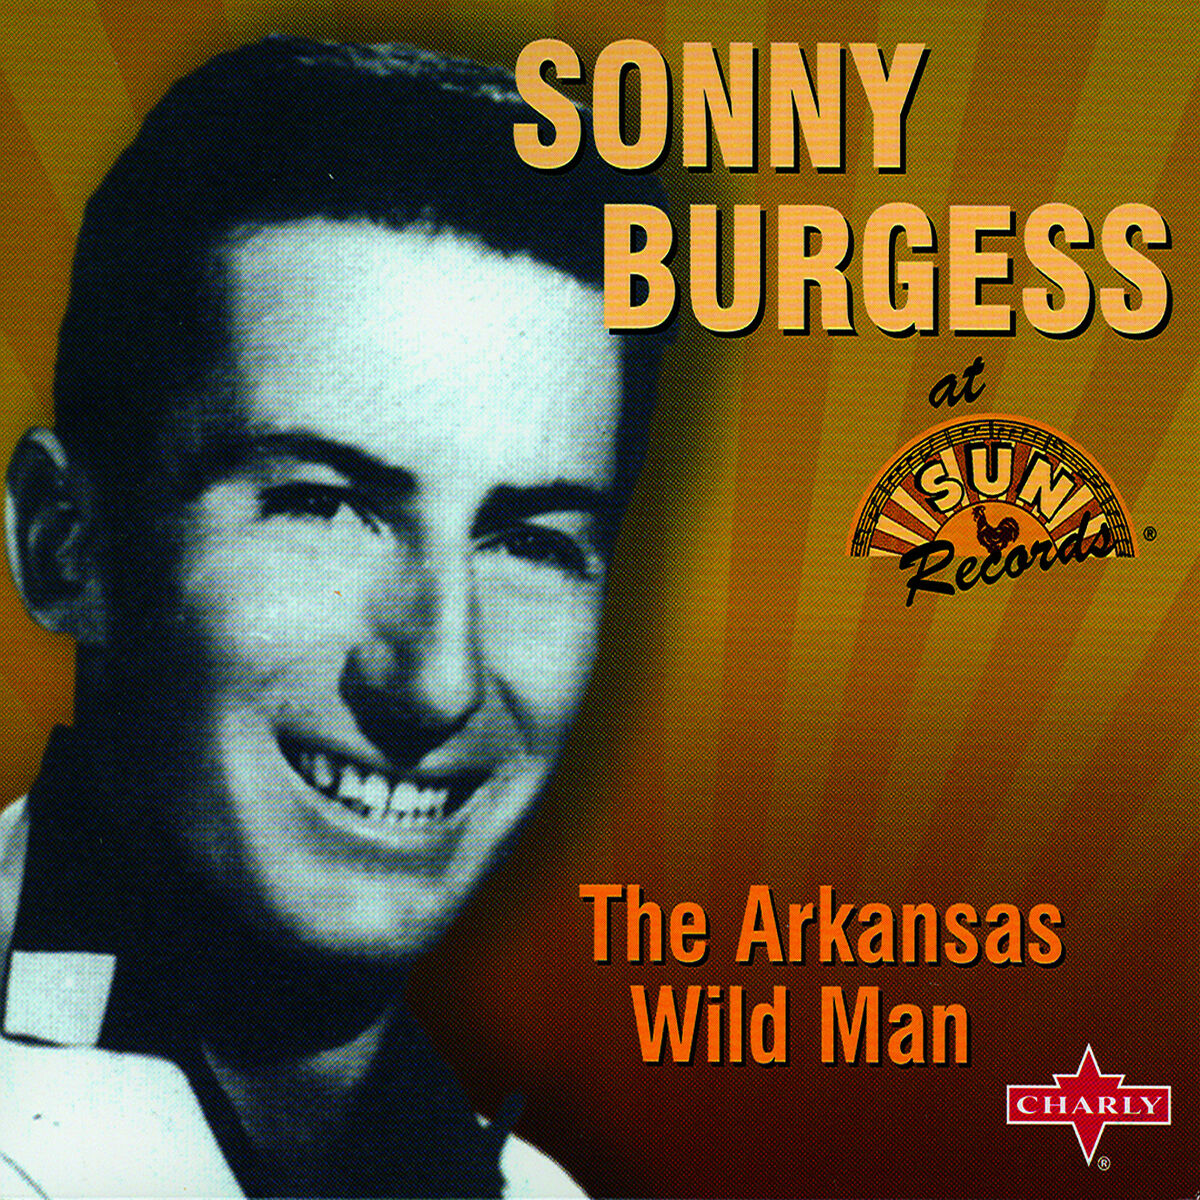 Sonny Burgess: albums